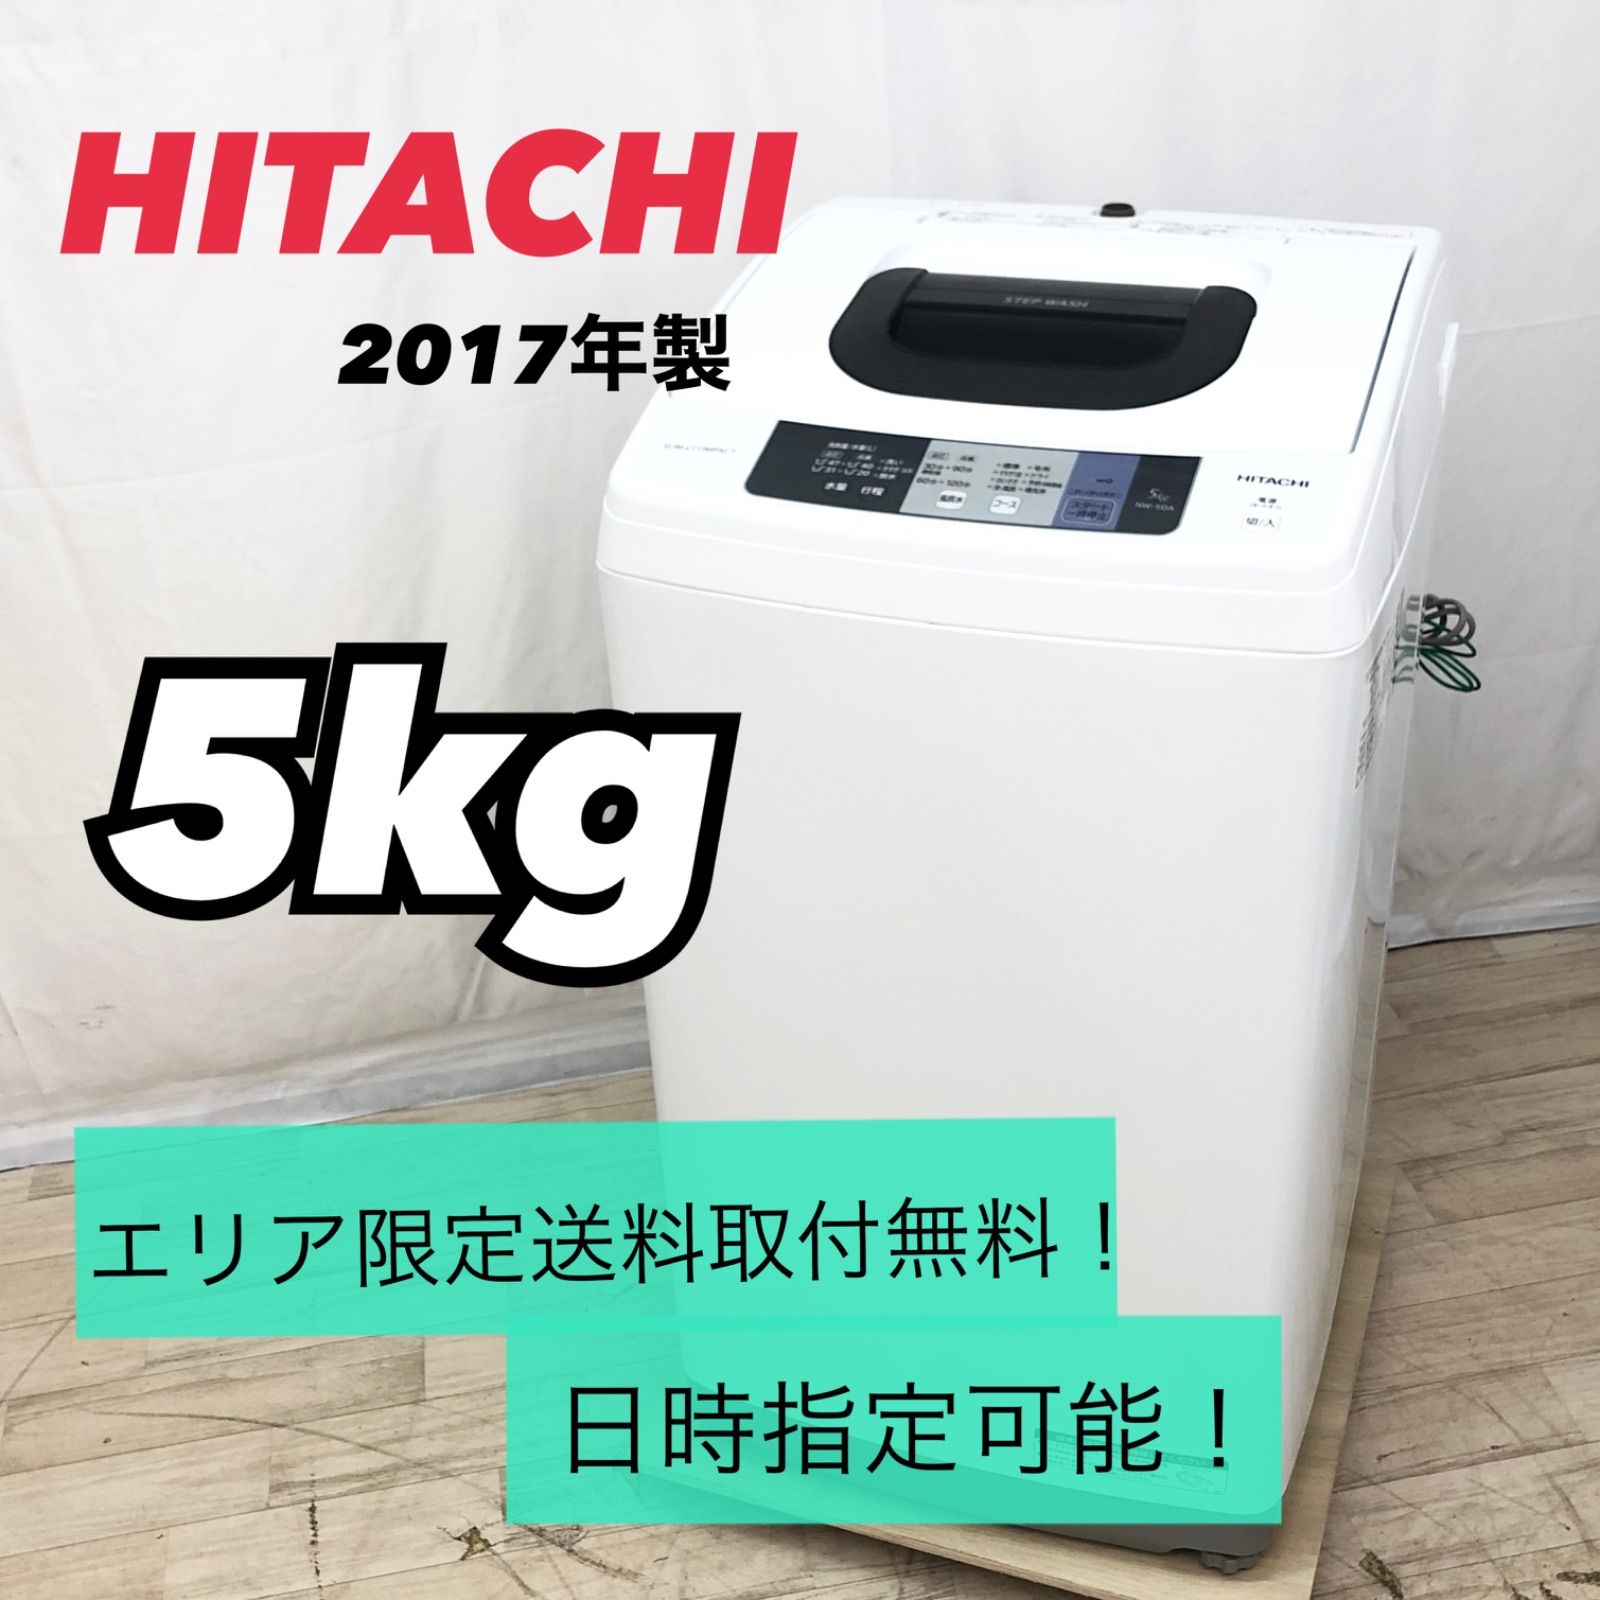 HITACHI 日立 縦型洗濯機 5kg NW-50A 2017年製 白 ホワイト 一人暮らし 